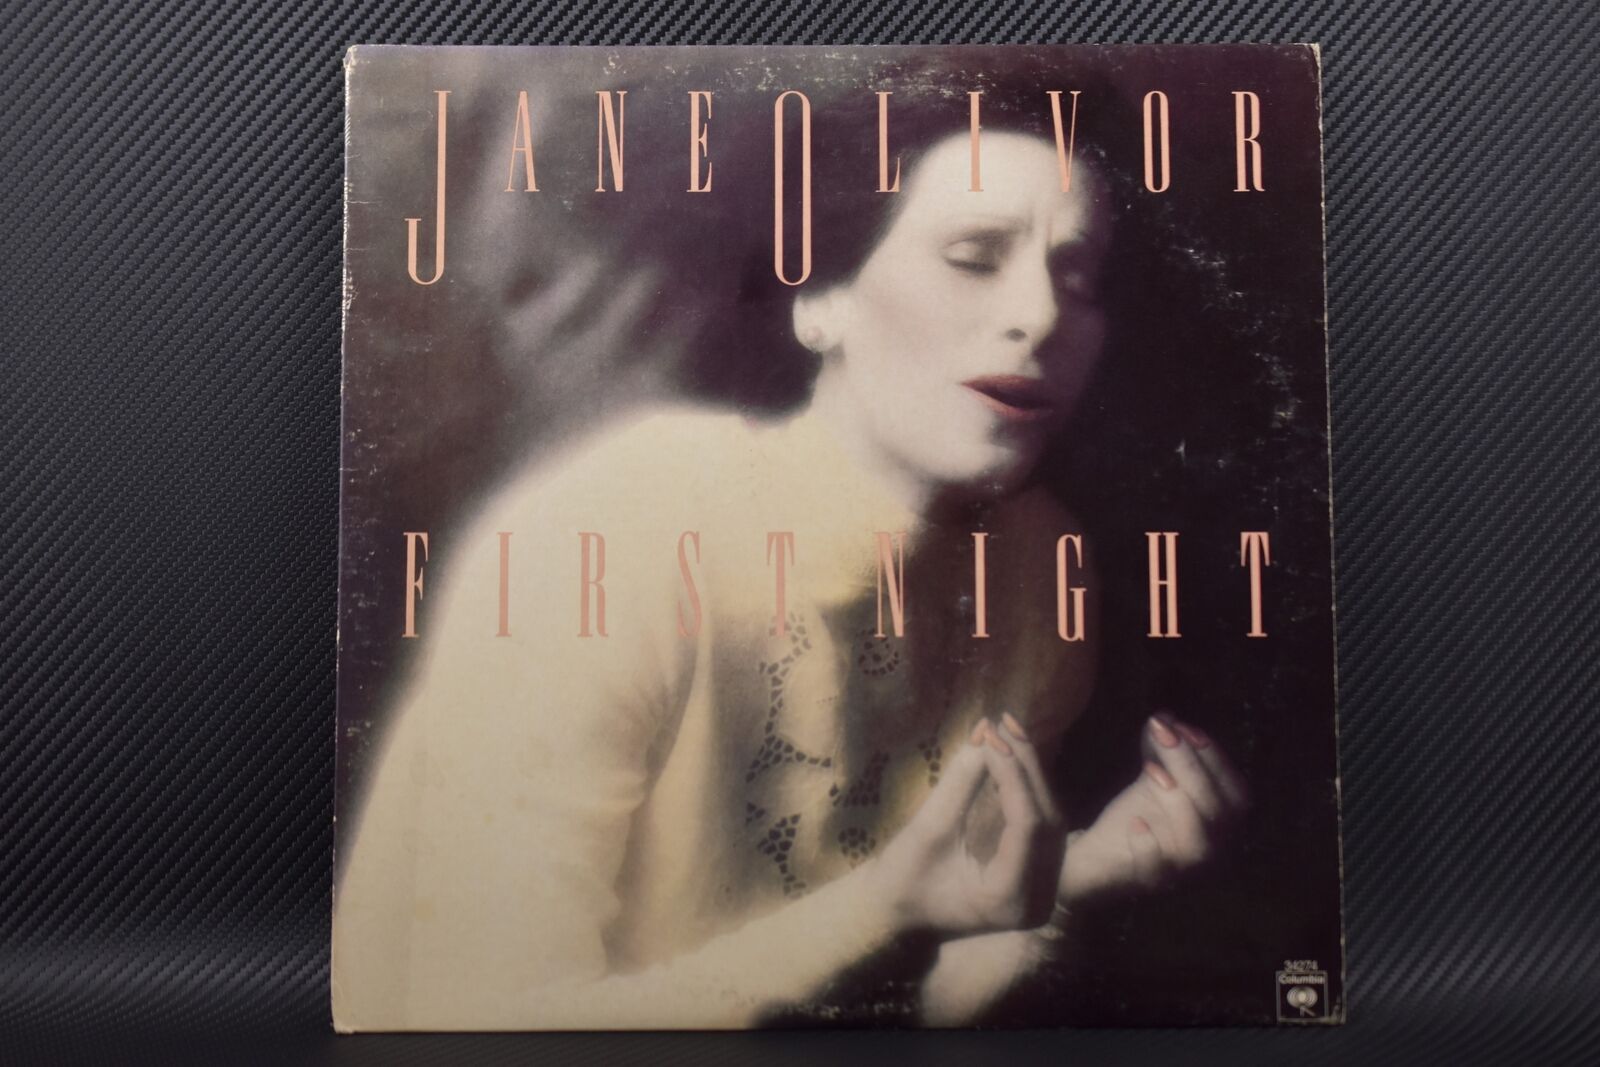 Vtg Vinyl Record Album Columbia Records CBS Jane Oliver First Night PC 34274